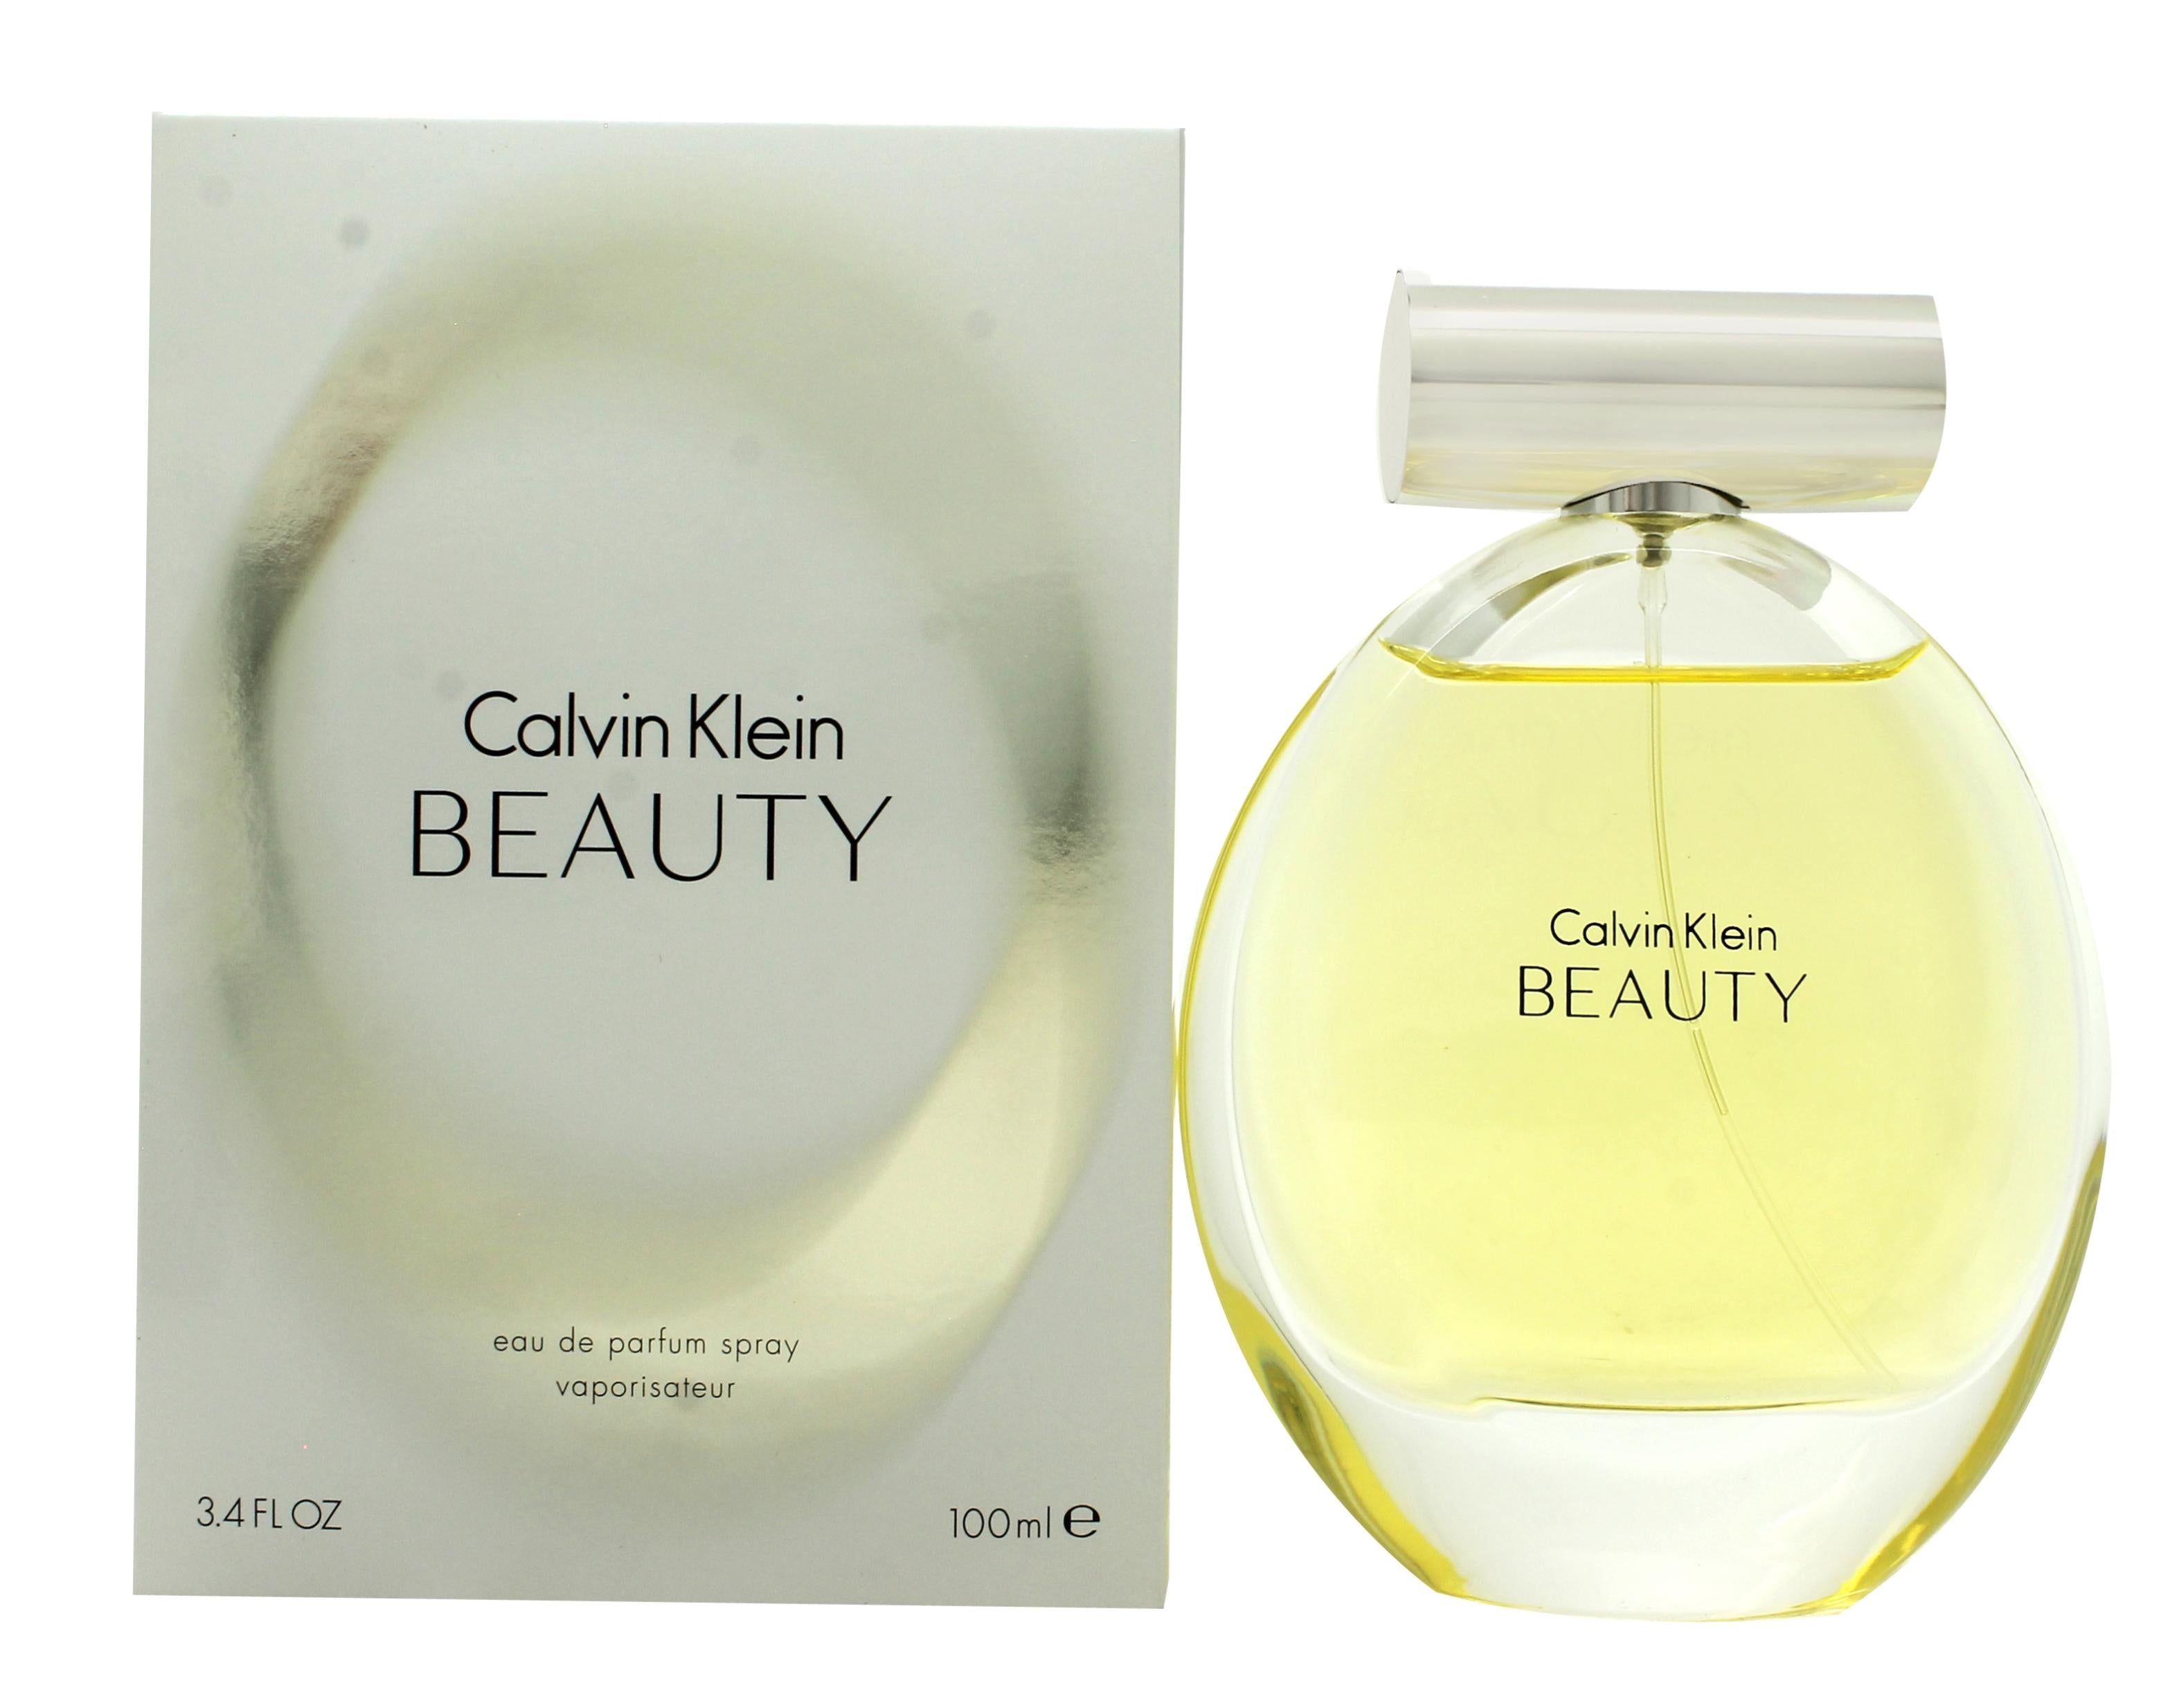 View Calvin Klein Beauty Eau de Parfum 100ml Spray information